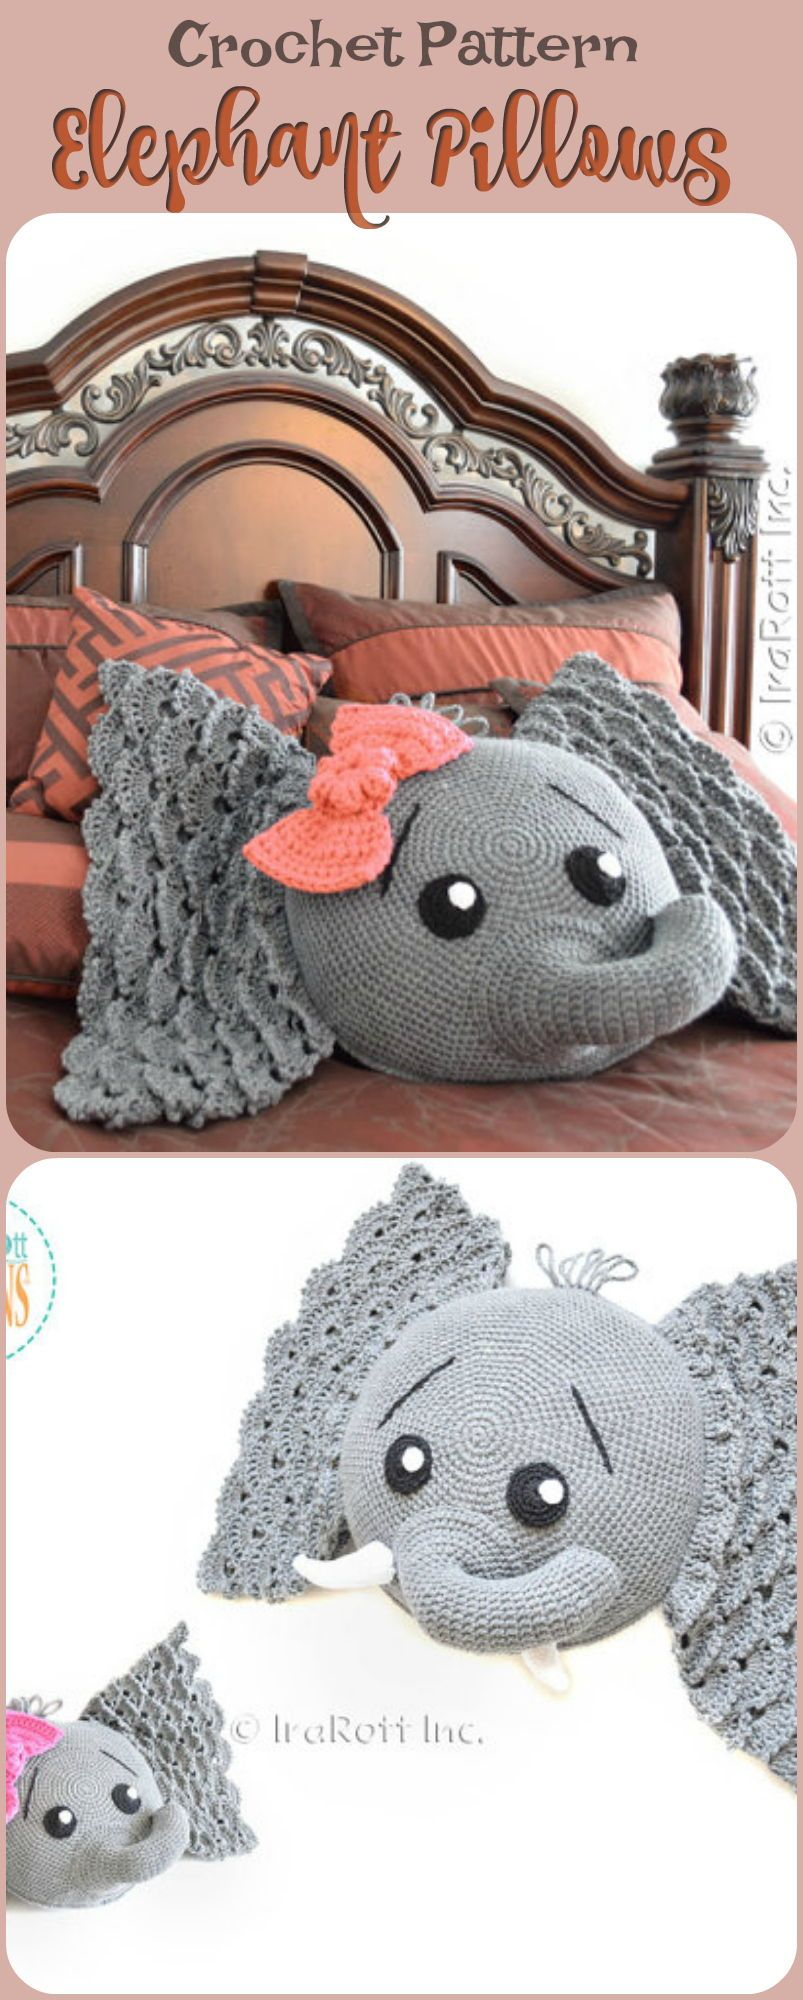 Crochet Elephant Pillow Pattern So Cute These Elephant Crochet Pillows Crochet Elephant Pillow